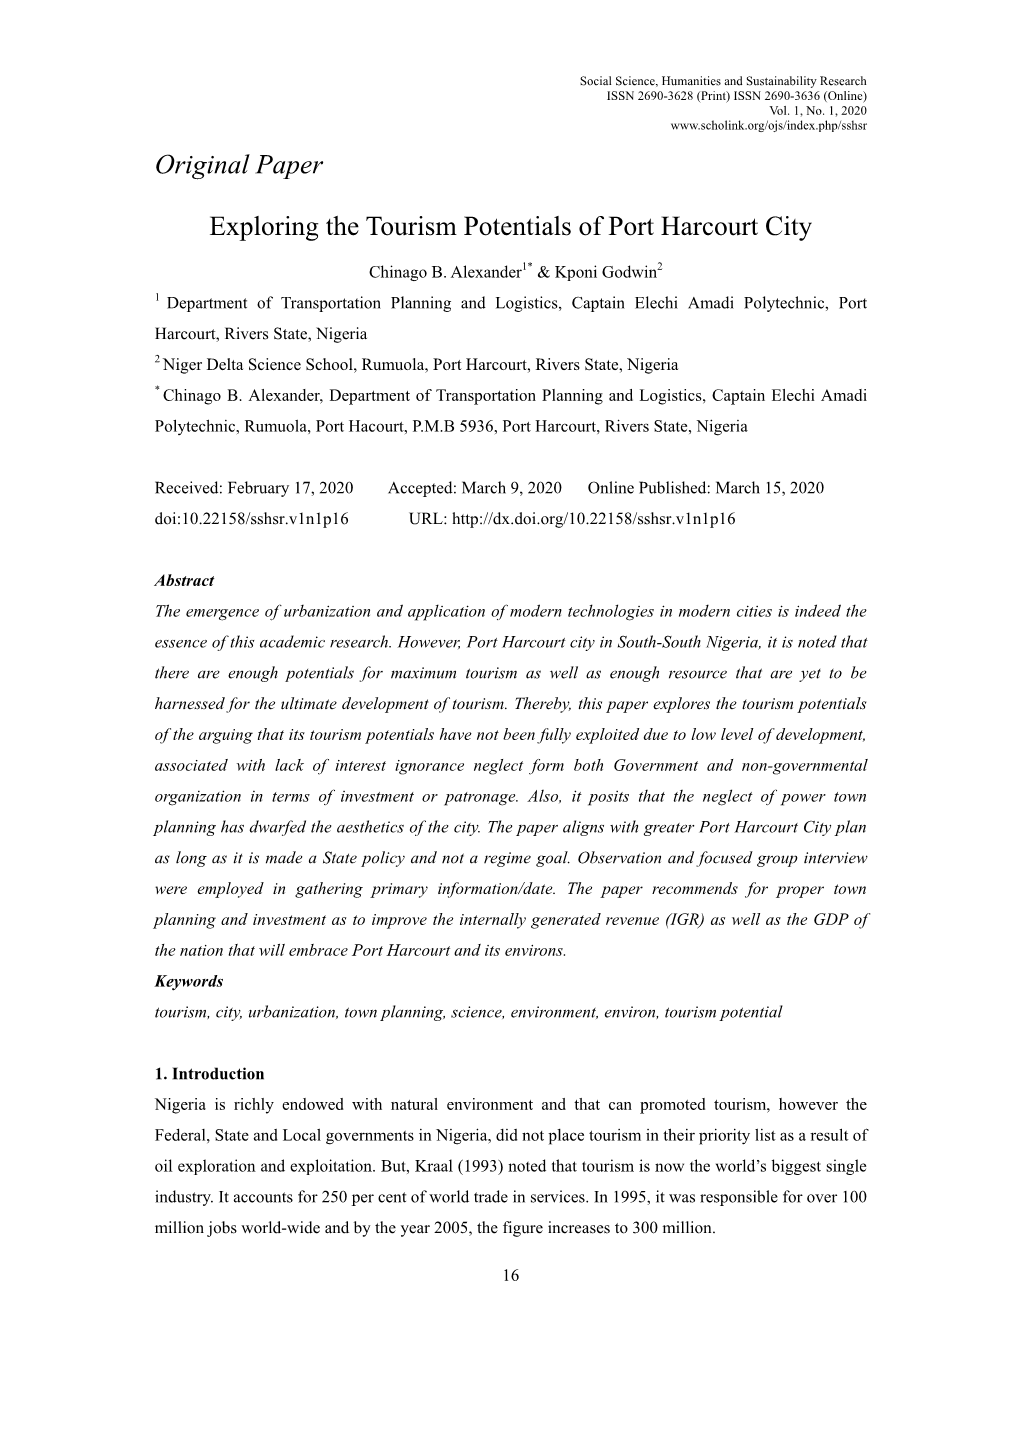 Original Paper Exploring the Tourism Potentials of Port Harcourt City